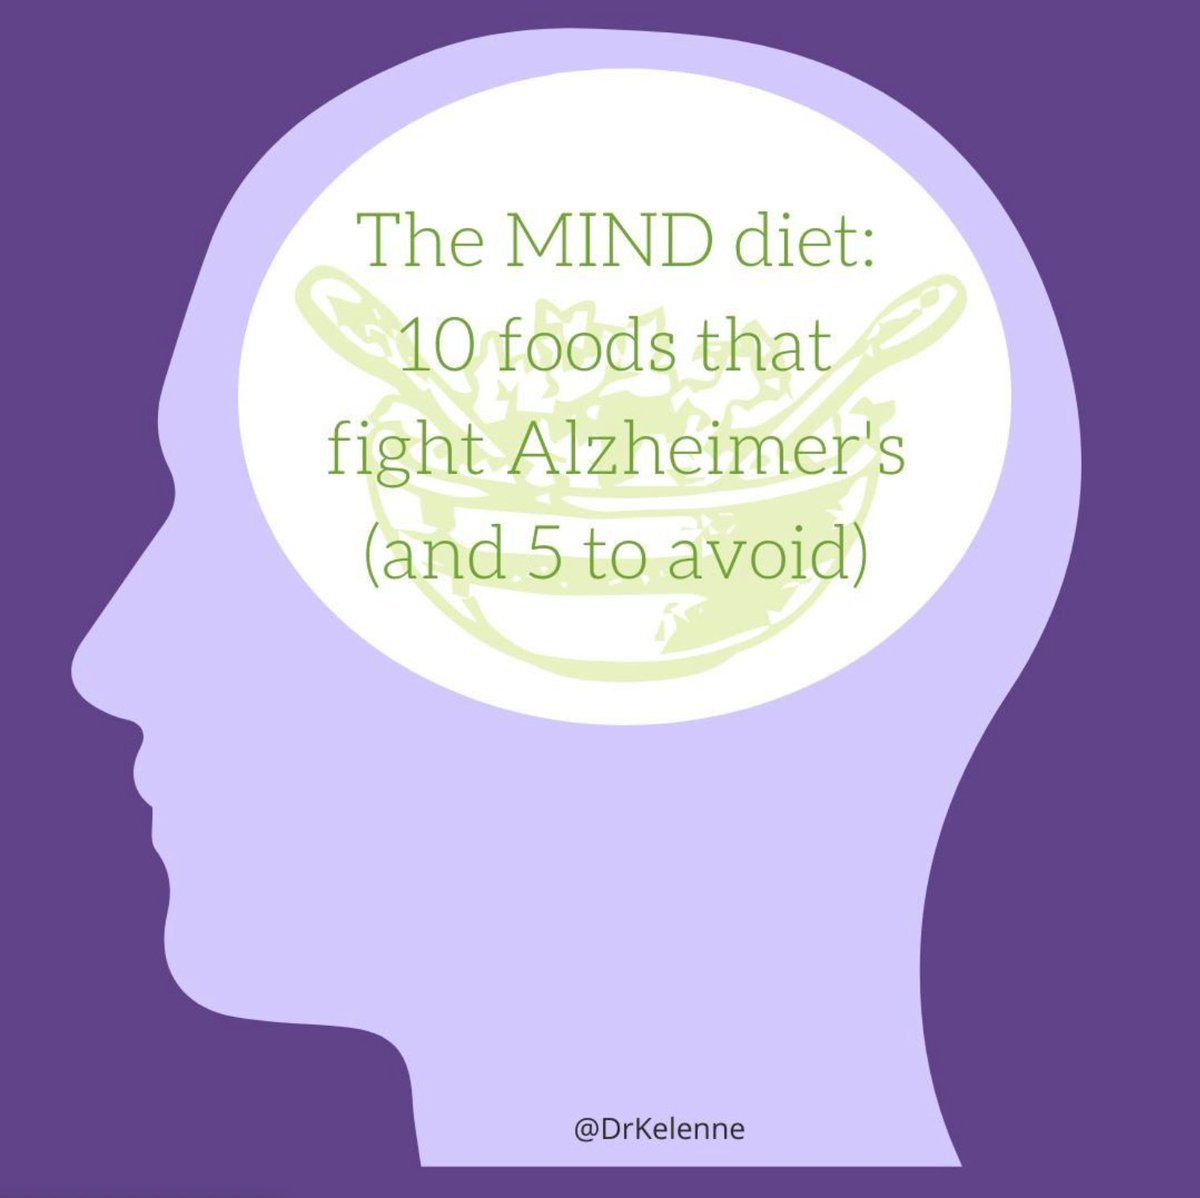 The MIND diet. Foods to help fight Alzheimer's. #healthcaretips #familymedicine #caribbean #blackdoctor #telemedicine #telehealth #yourcaribbeandoctor #alzheimersawareness 🇹🇹🇻🇨🇵🇷🇦🇬🇧🇸🇧🇧🇧🇷🇨🇦🇫🇰🇬🇩🇬🇾🇯🇲🇭🇹🇱🇨🇰🇳